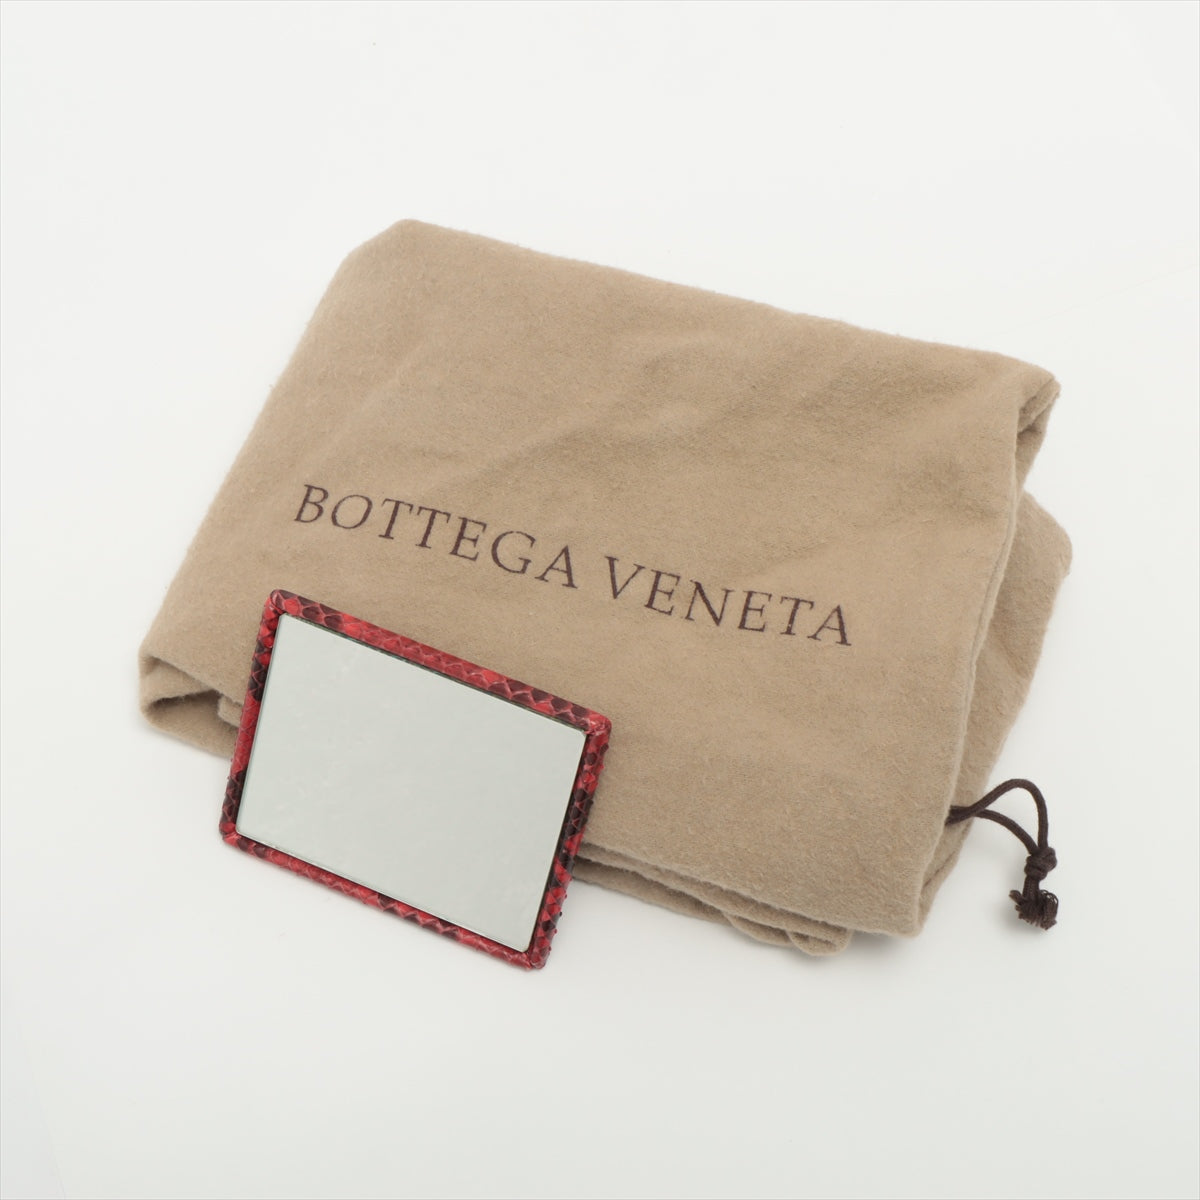 Bottega Veneta Pyson 托特包 紅色鏡面